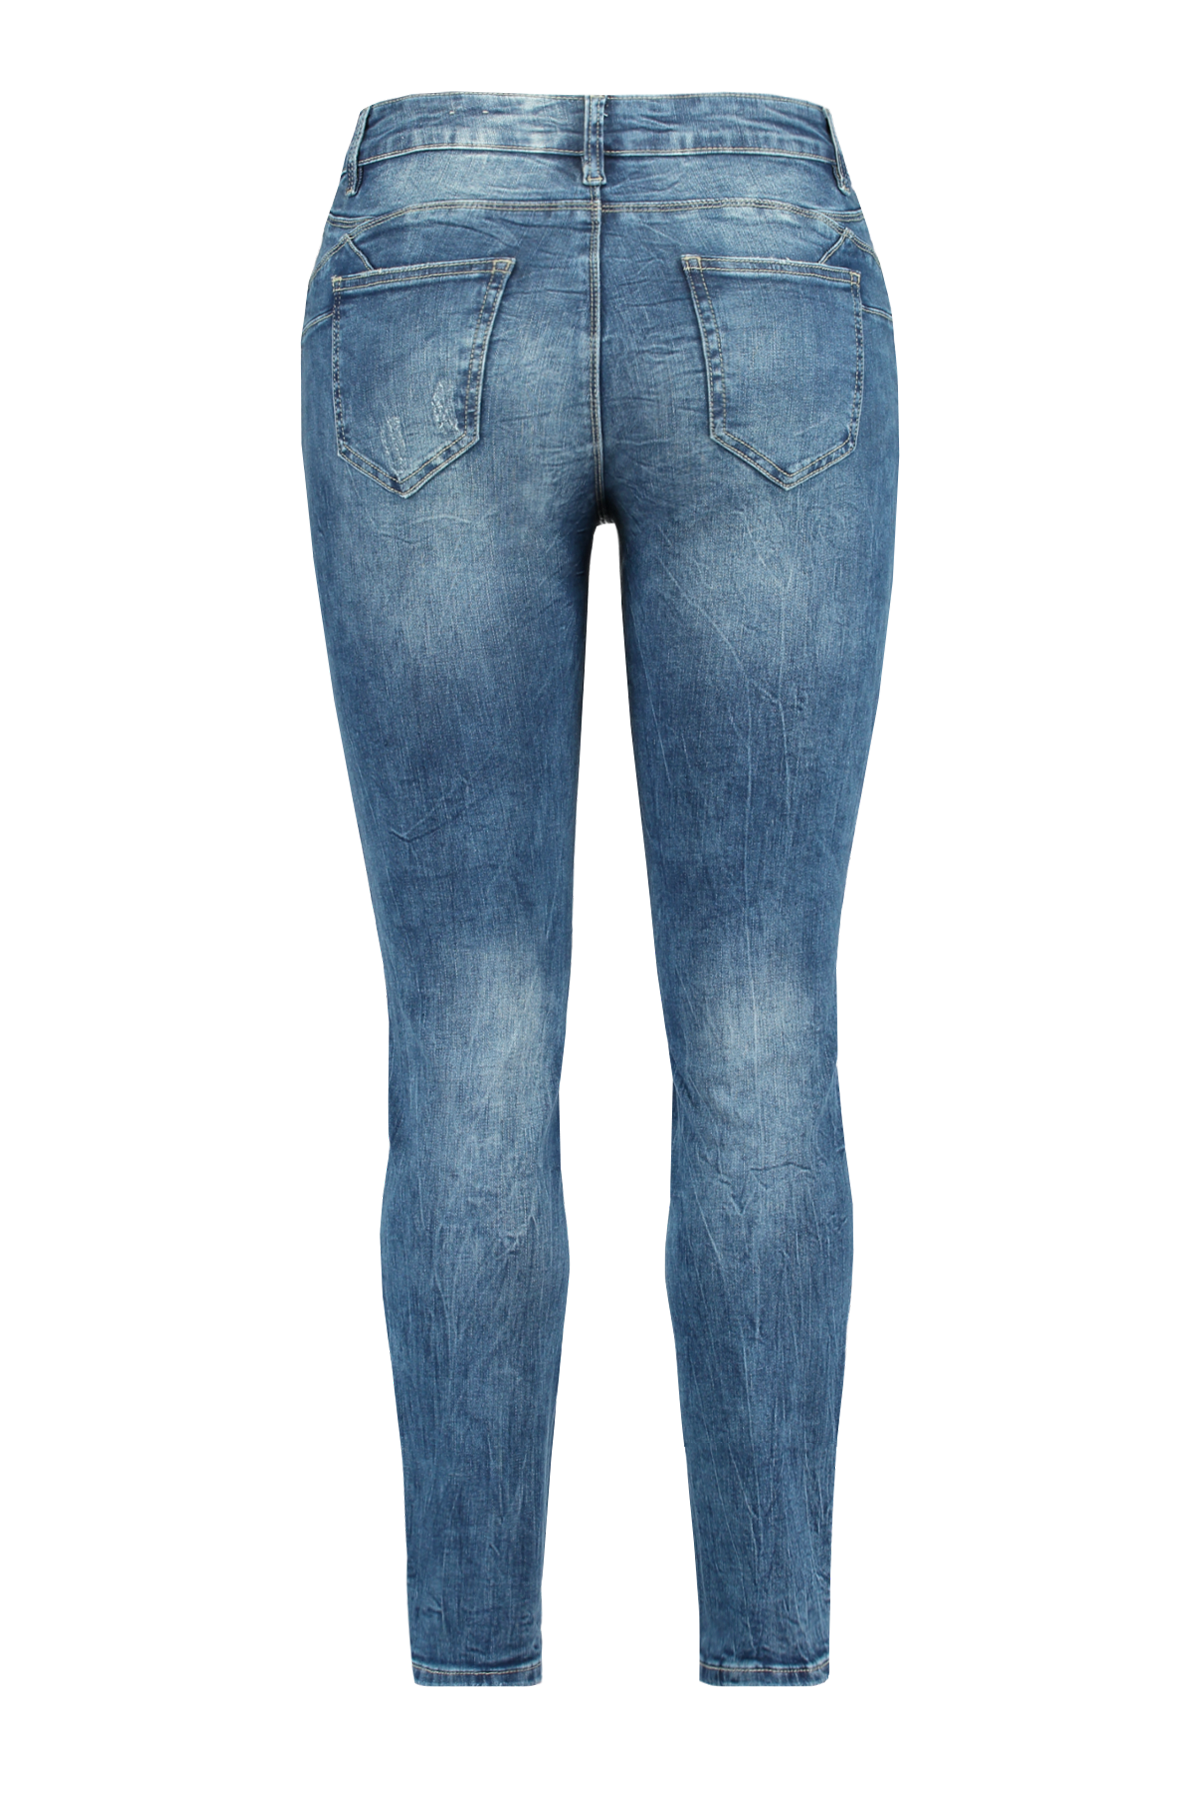 Damen Skinny Jeans Mit Push Up Effekt Bei Ms Mode®